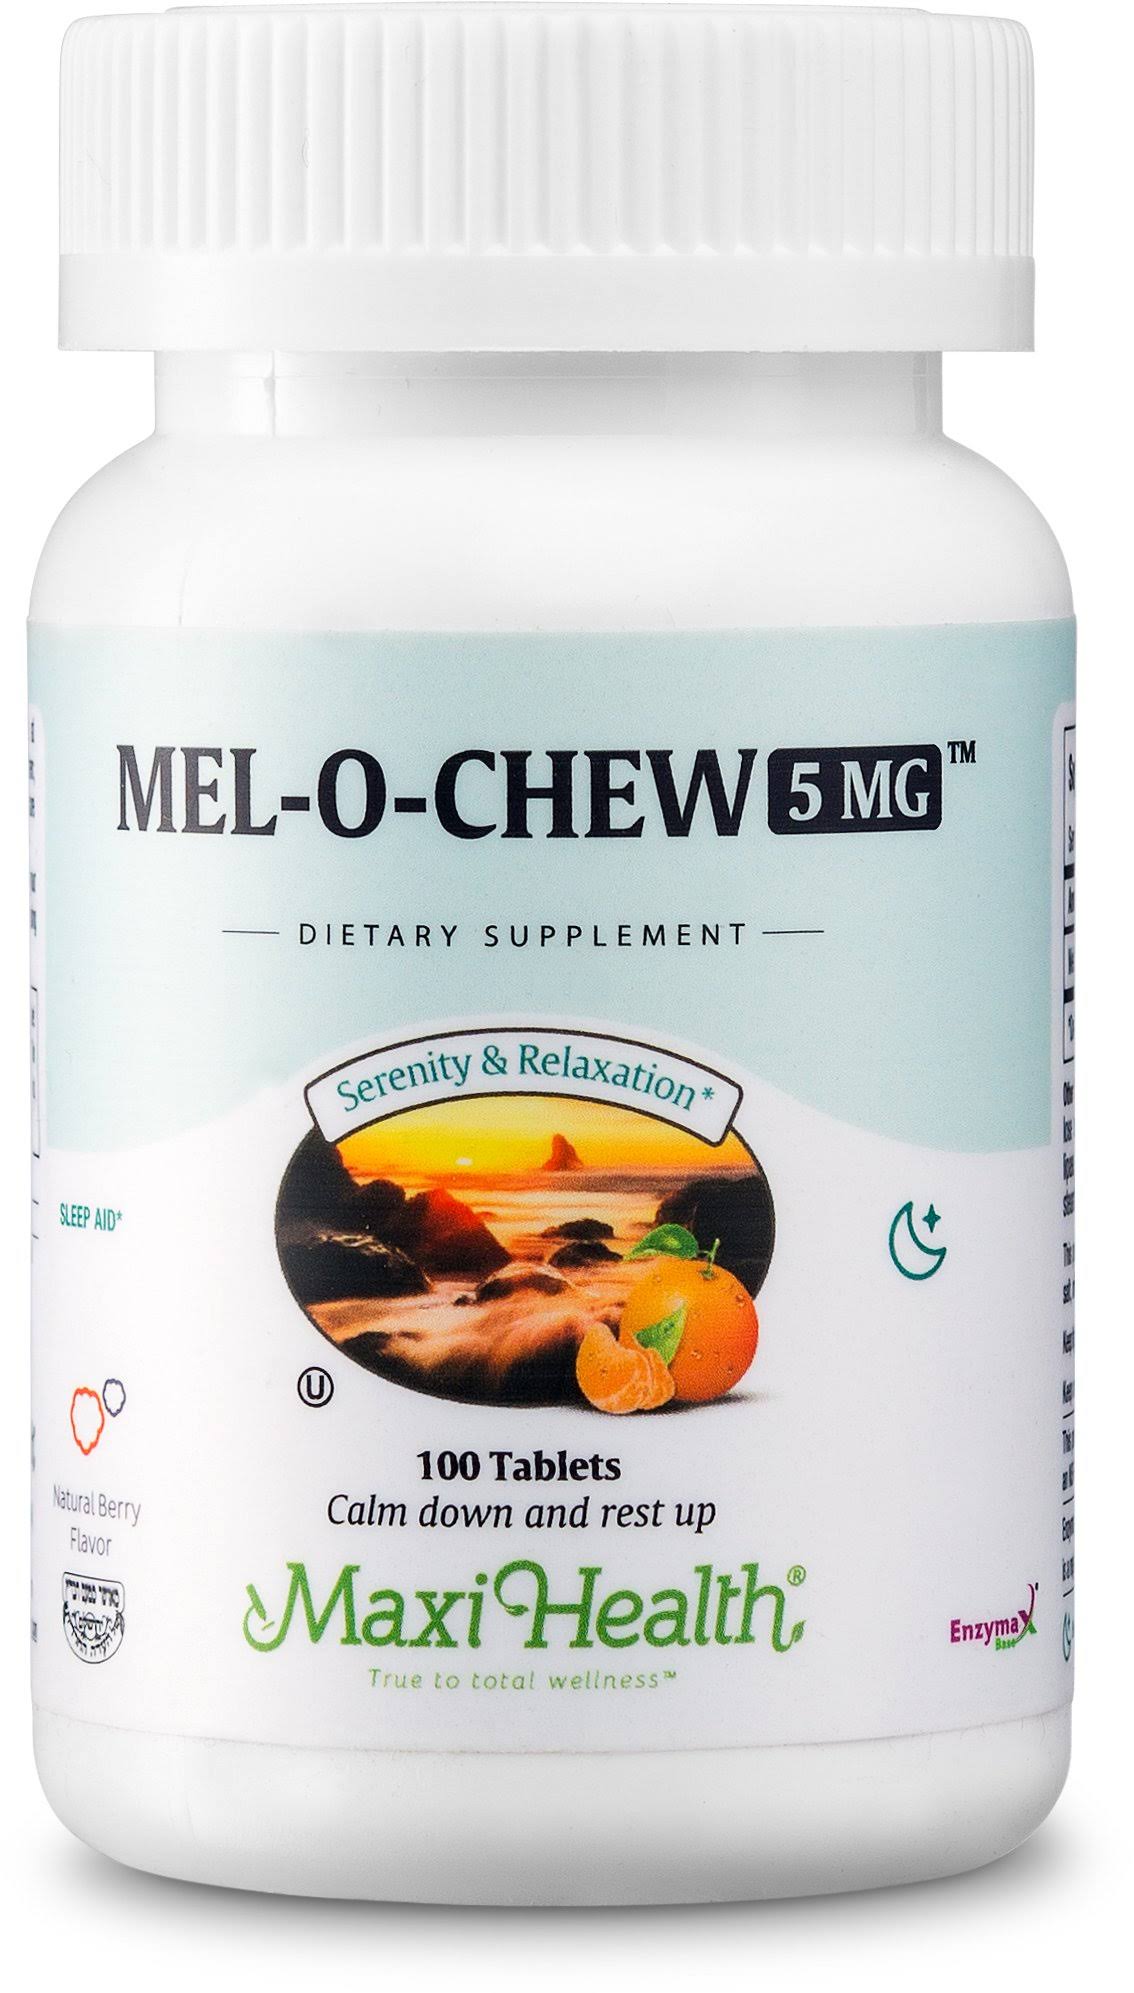 Maxi Health Extra-Strength Mel-O-Chew 5 MG Kosher Chewable Melatonin, Berry Flavor